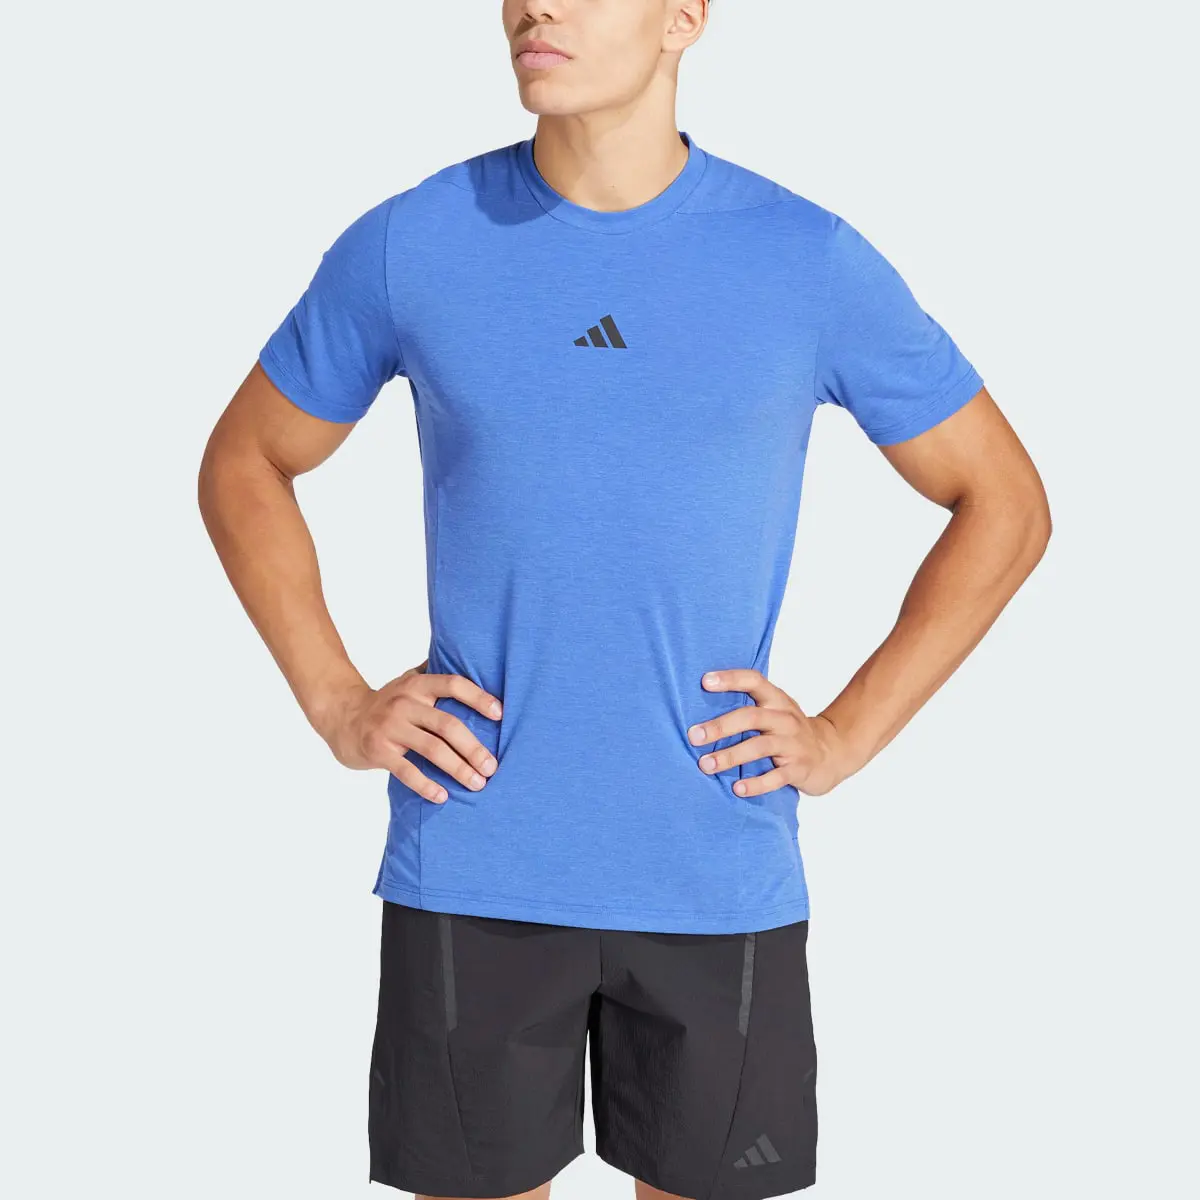 Adidas Designed for Training Workout T-Shirt. 1